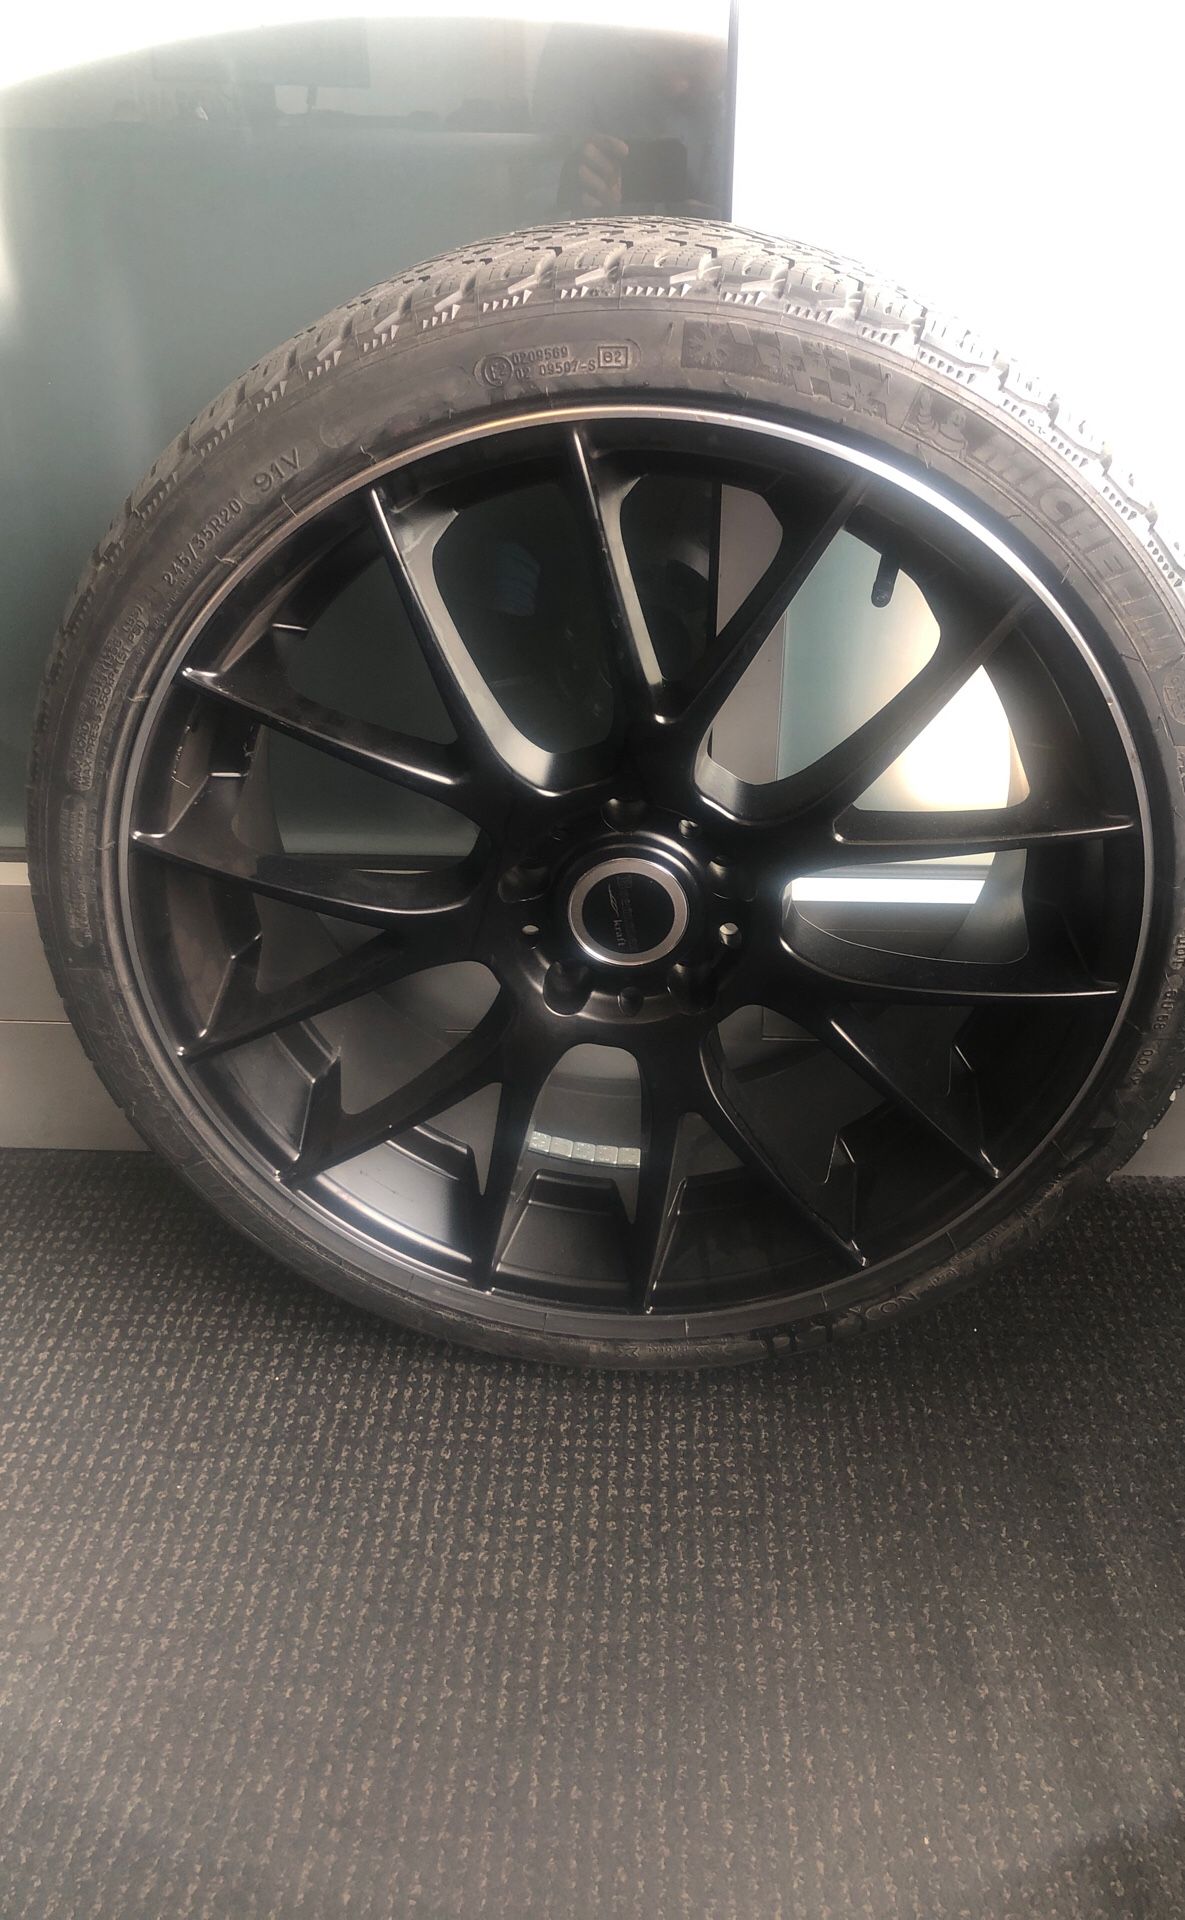 Brand new Michelin tire with rim